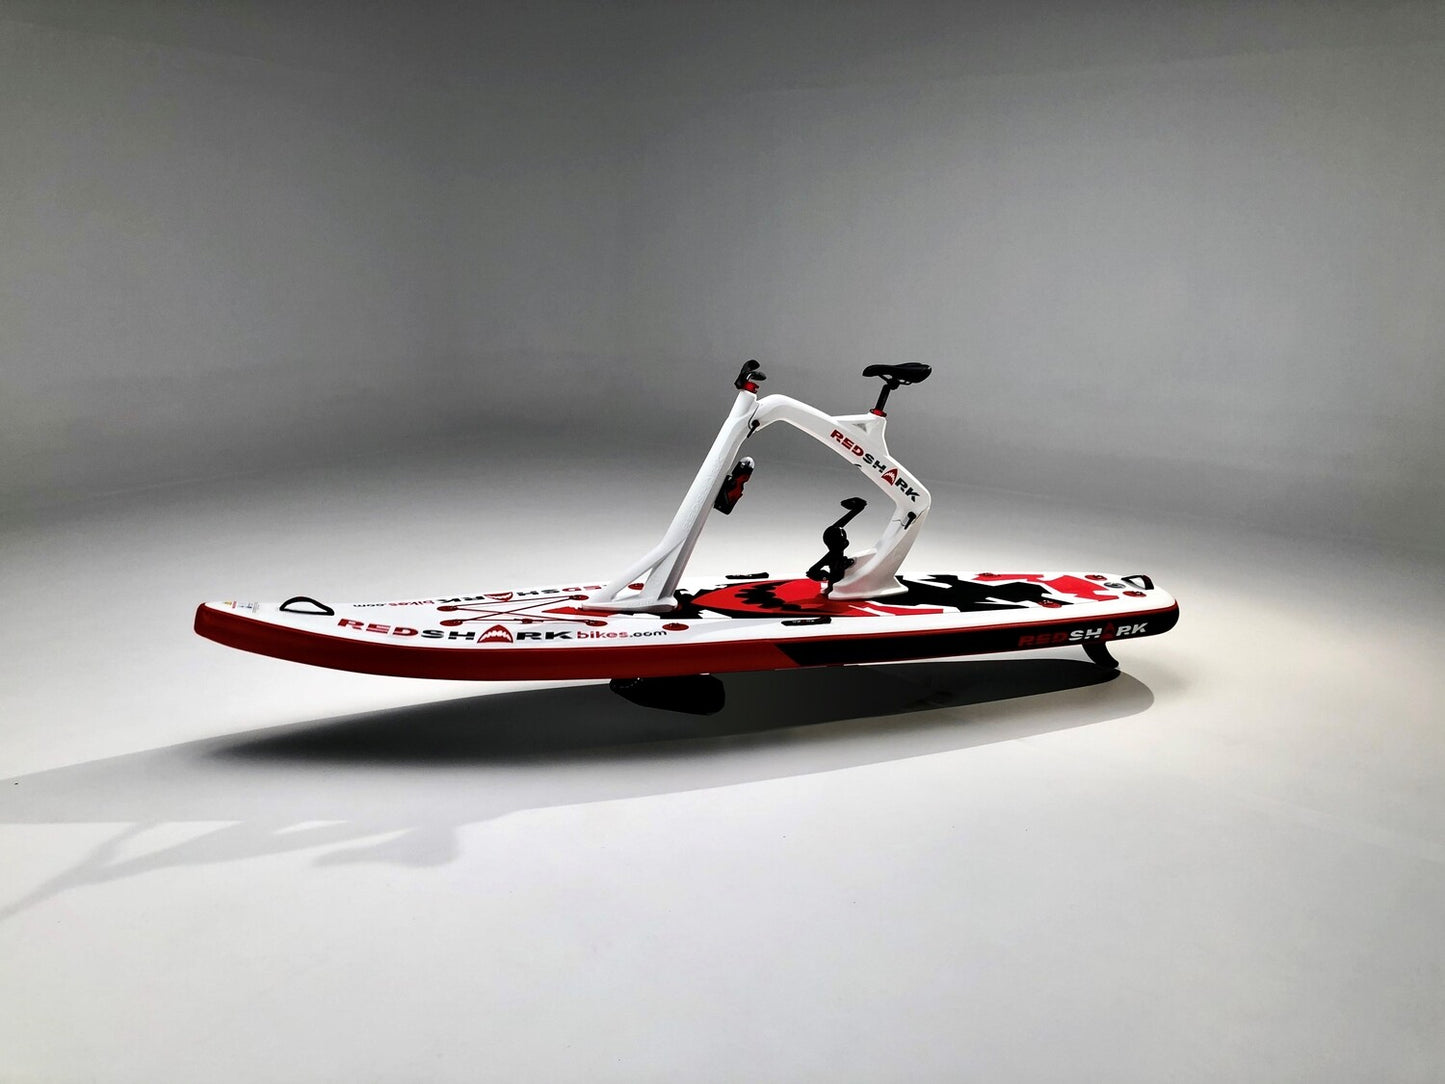 Enjoy Bike Surf model - red shark bike